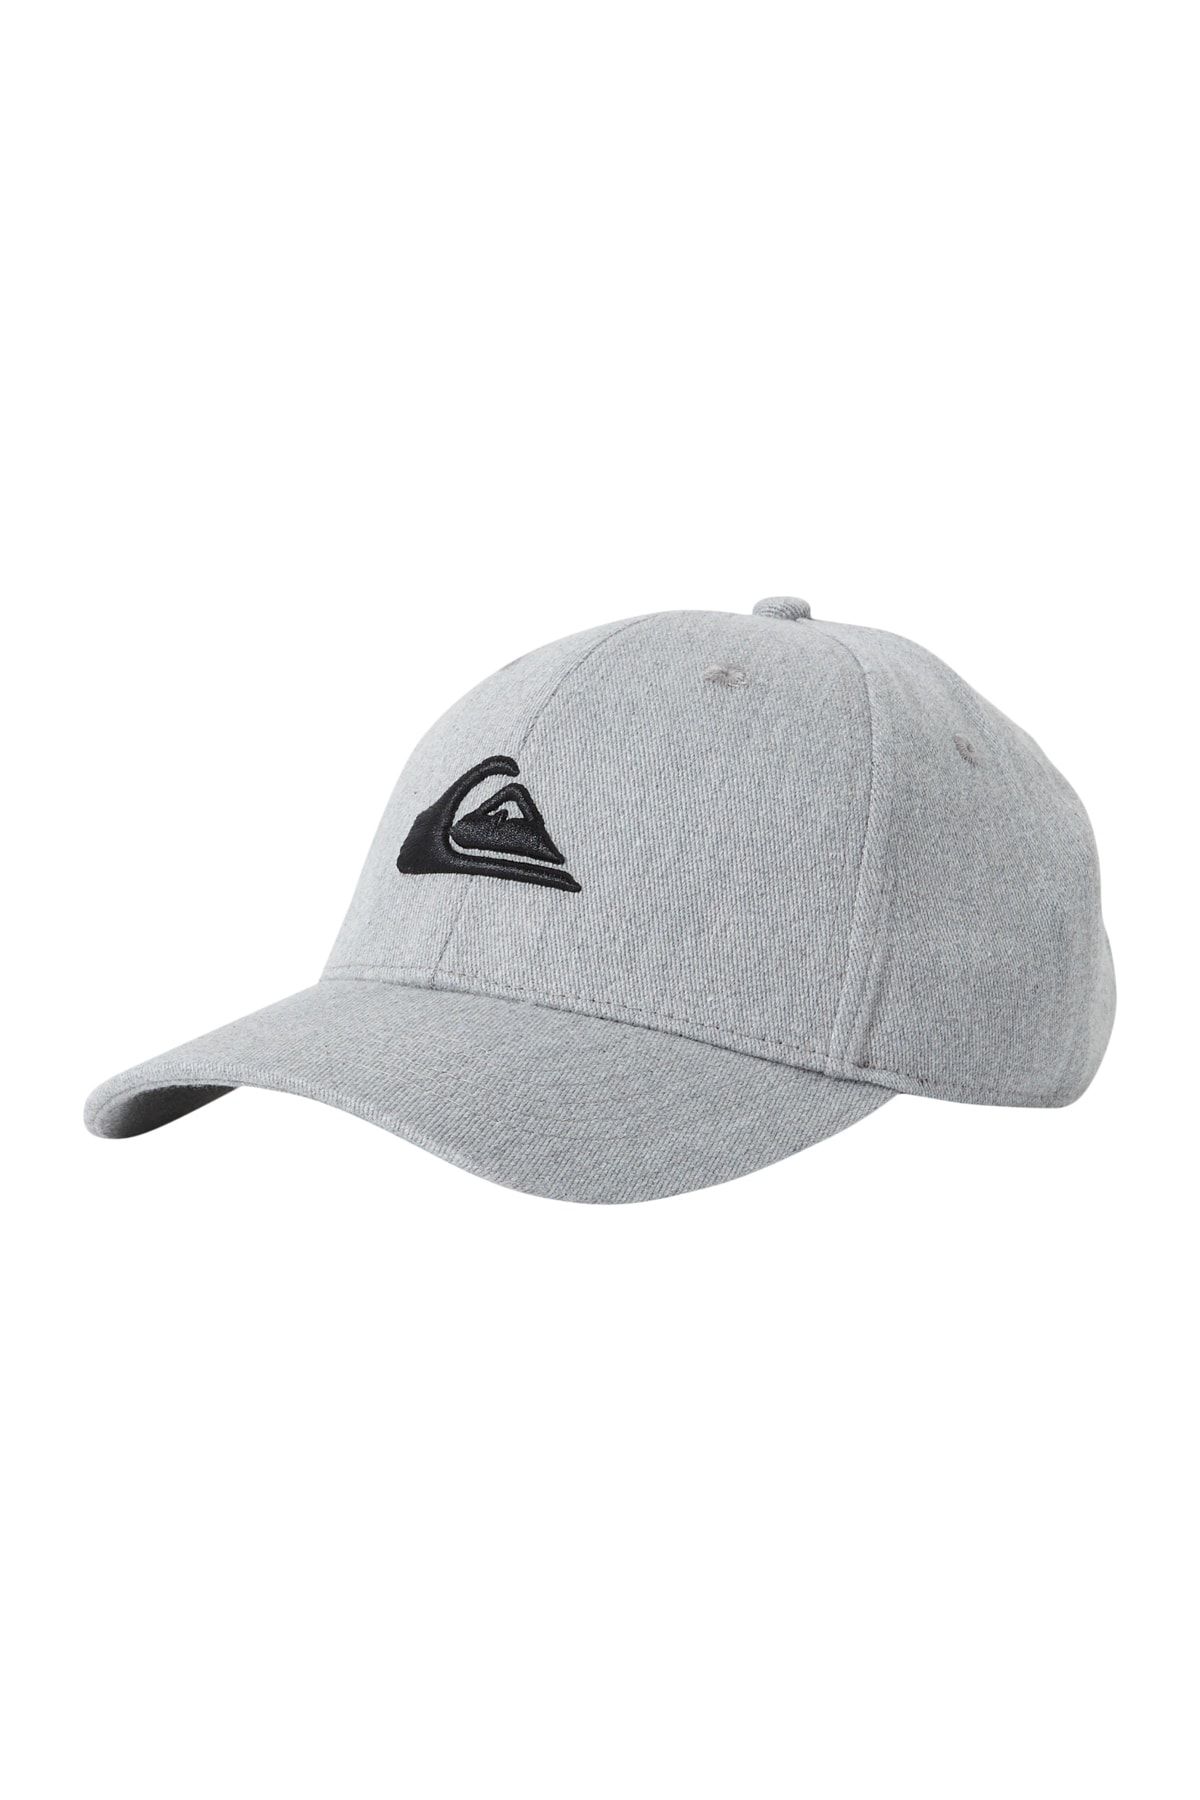 Quiksilver Decades Snapback Hdwr - Sgrh Hat Trendyol